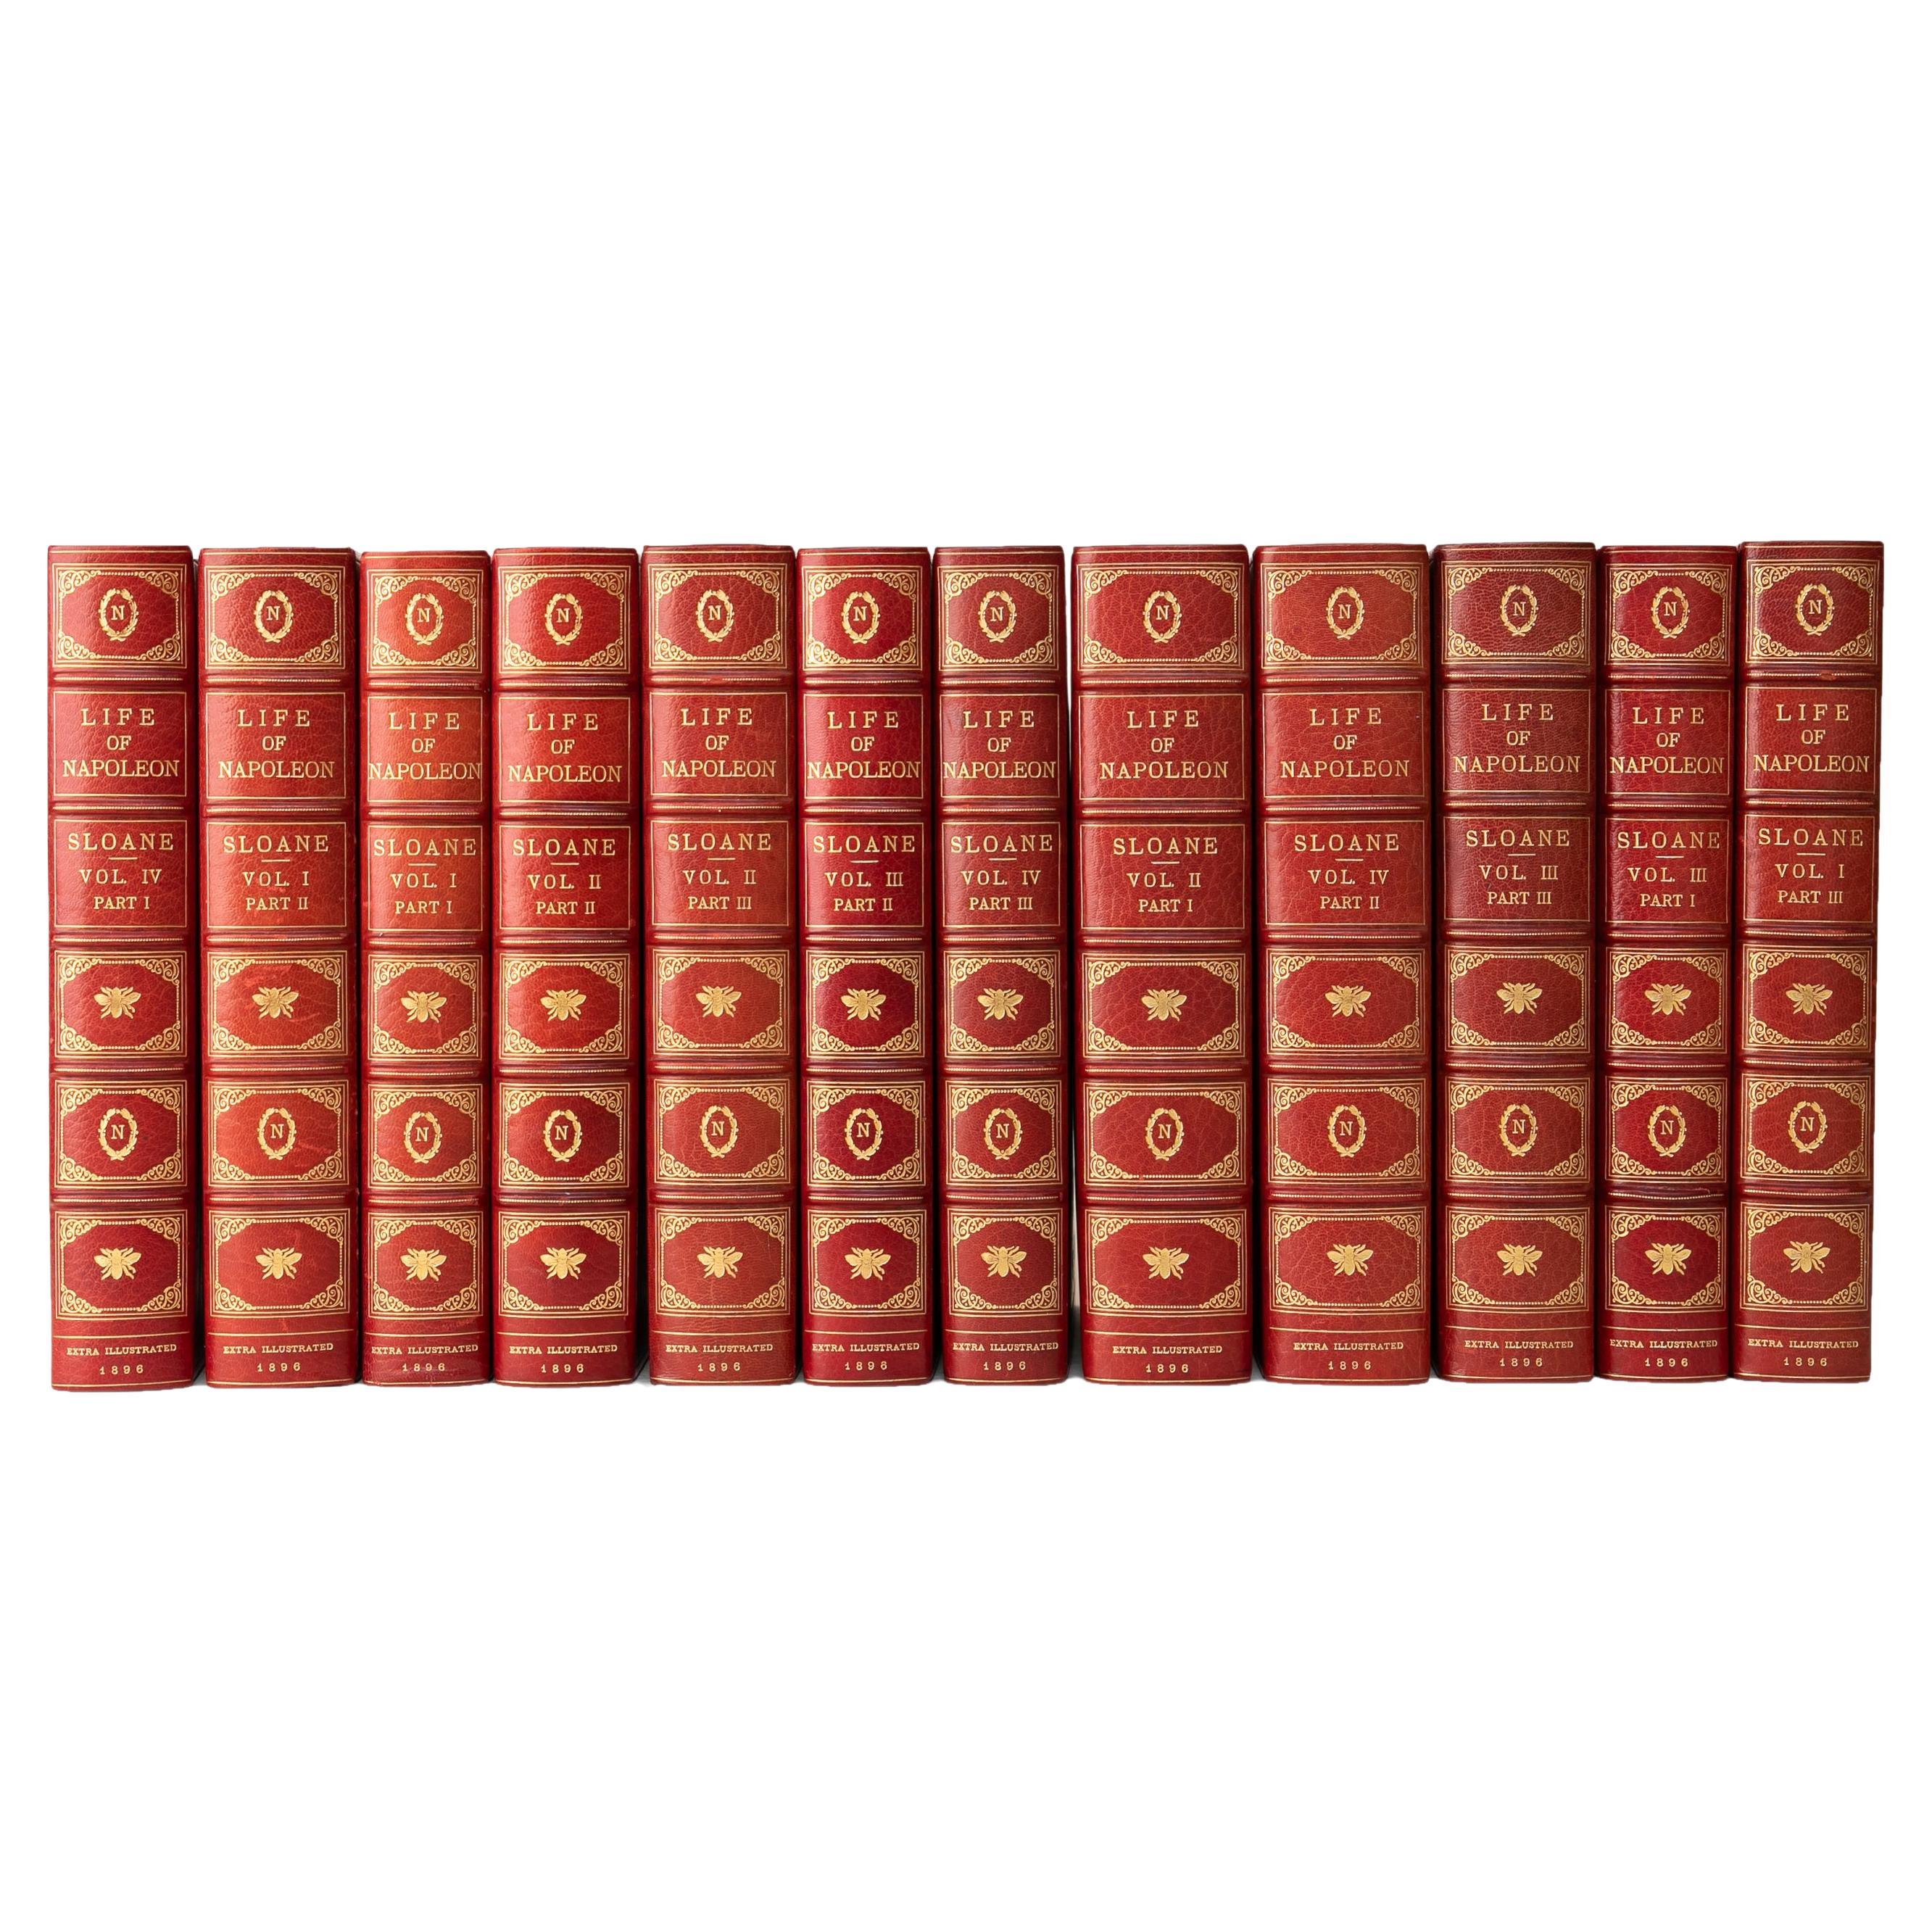 12 Volumes. William M. Sloane. Life of Napoleon.